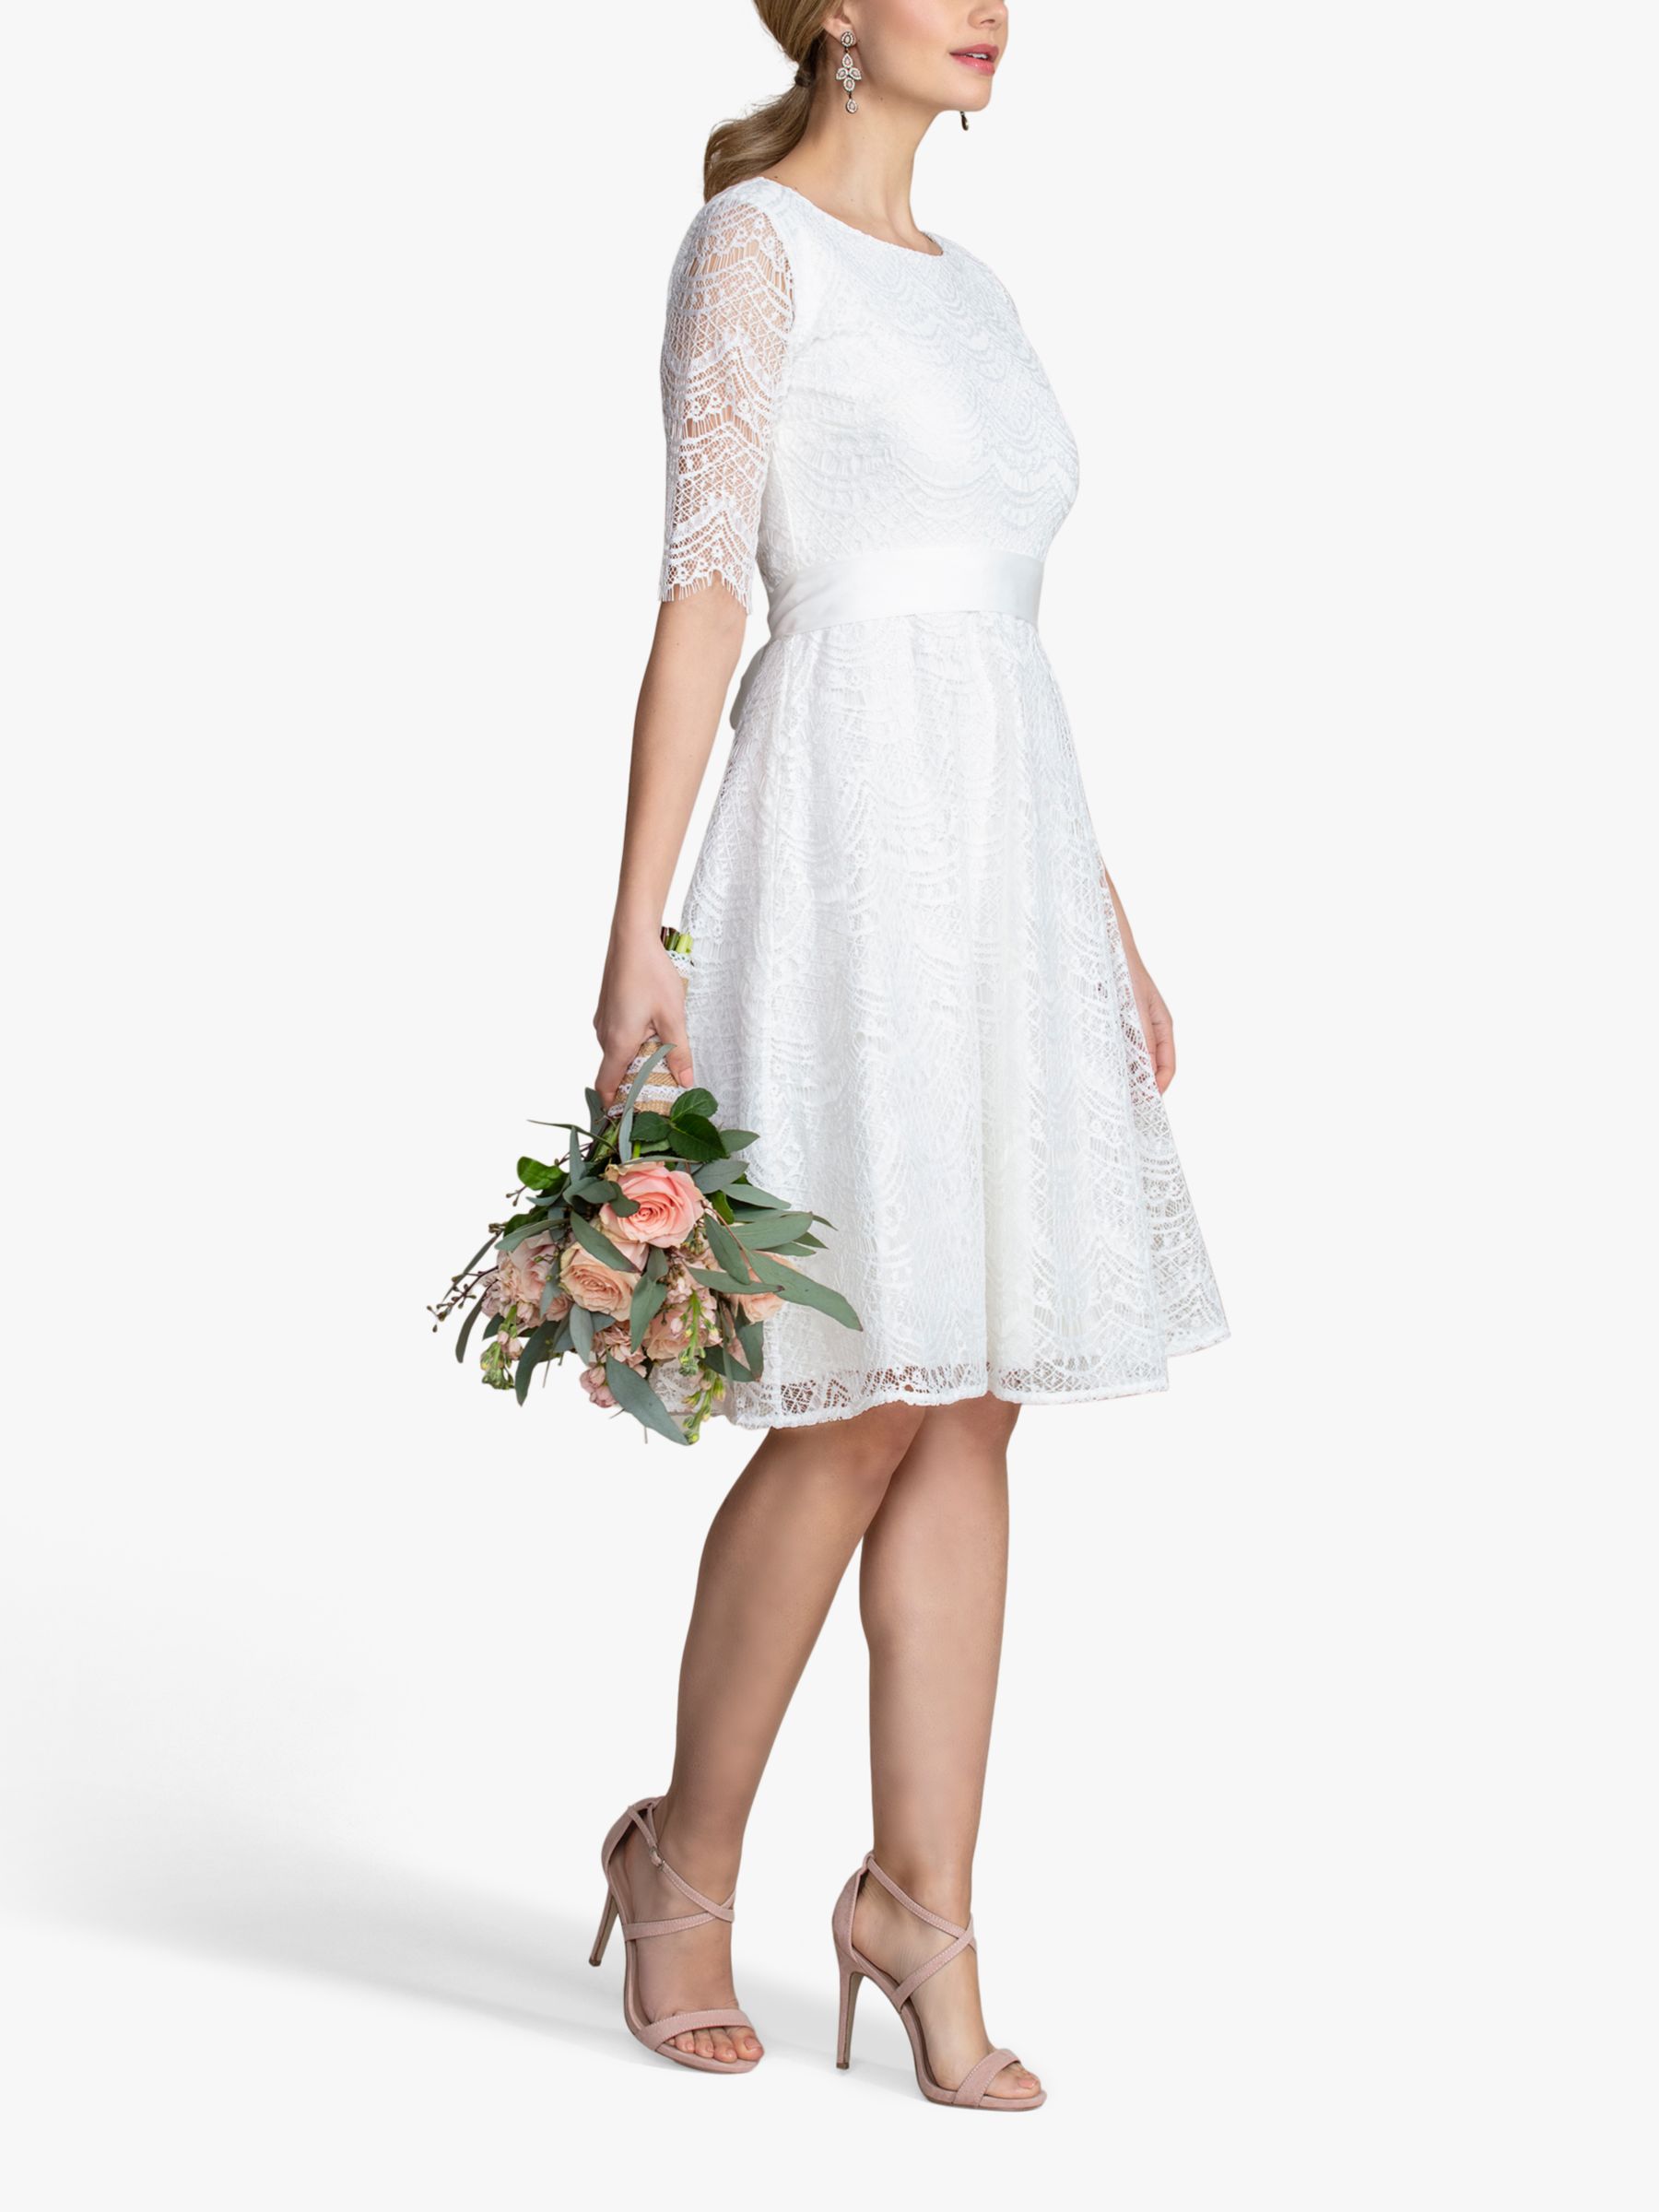 Alie Street Evie Lace Knee Length Wedding Dress, Ivory, 6-8